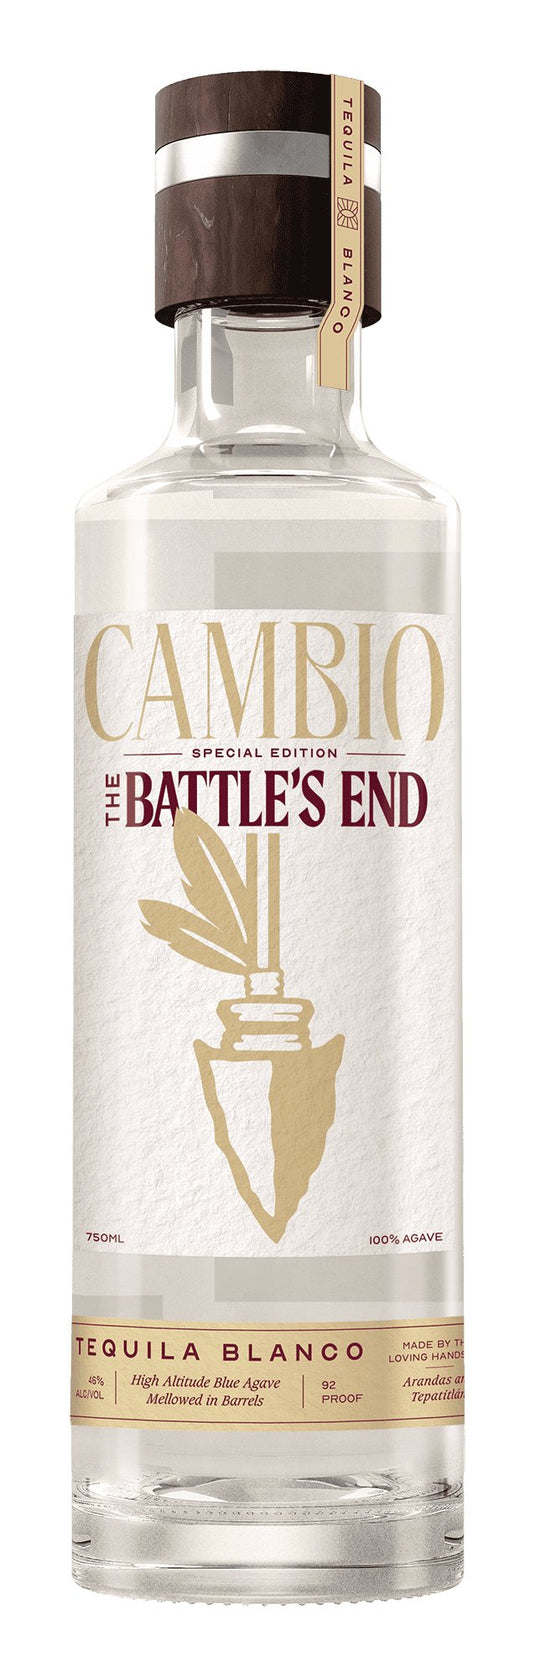 Cambio Battles End Blanco - Main Street Liquor